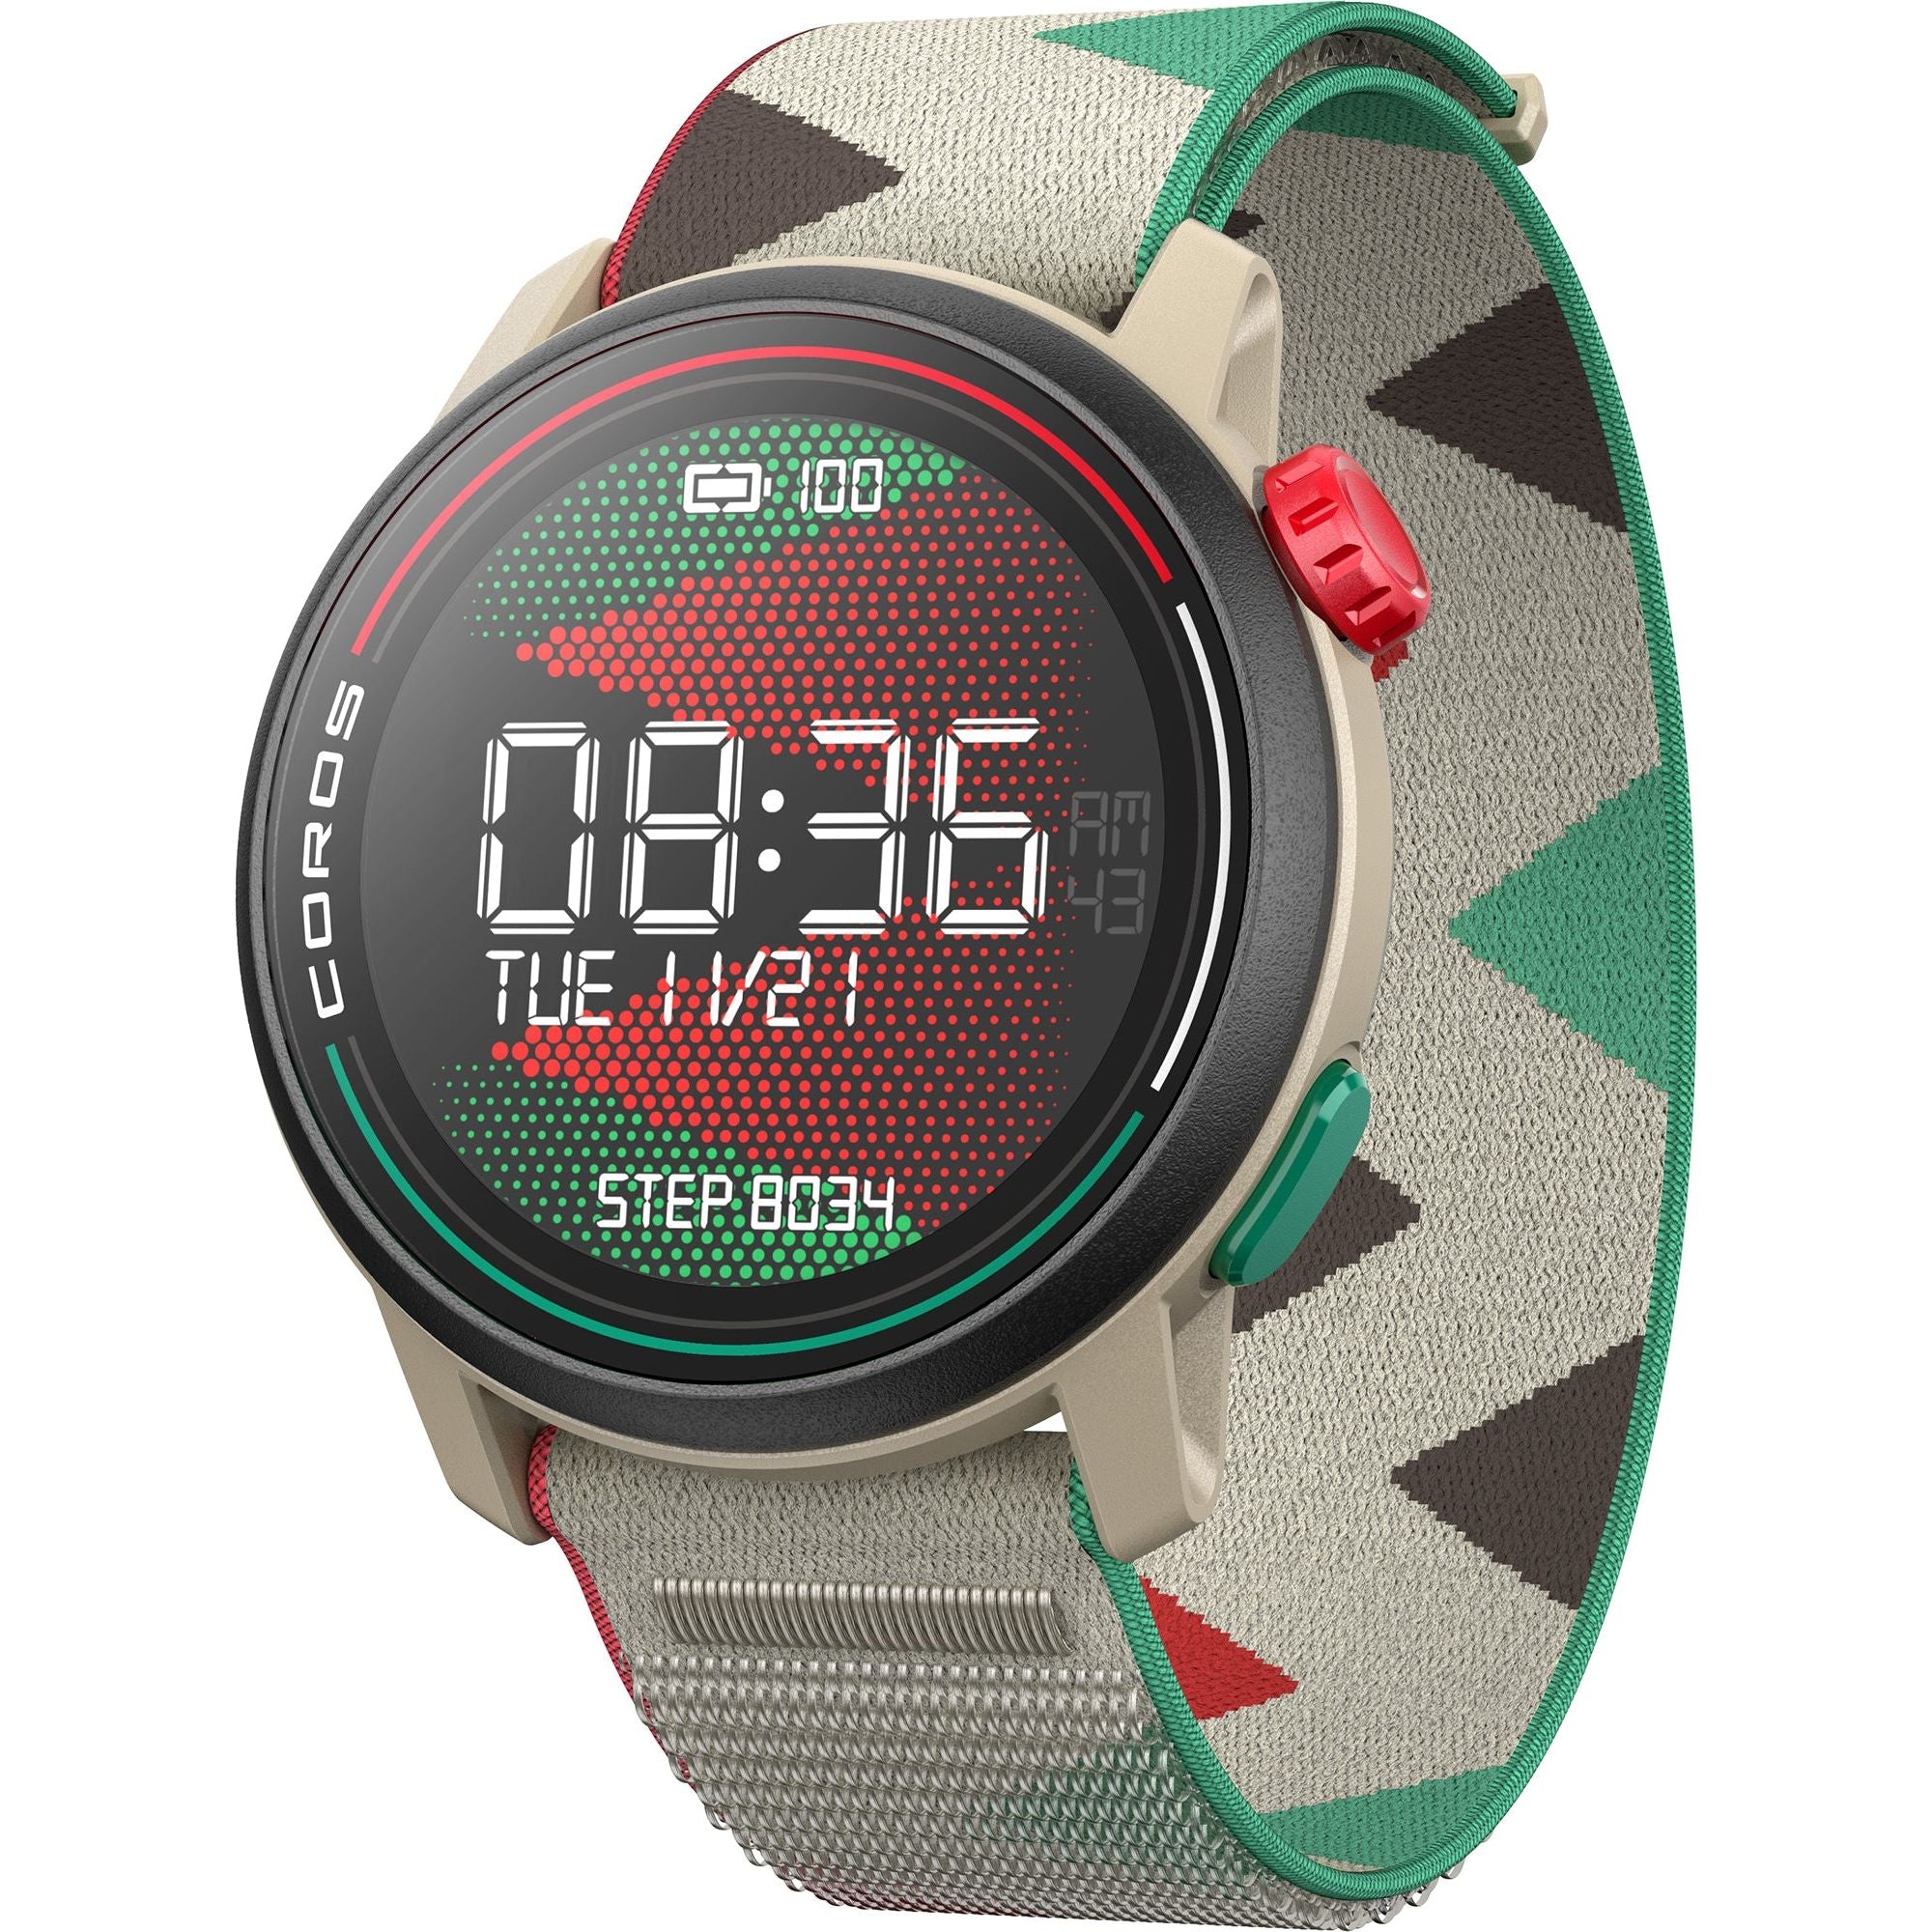 Coros PACE 3 GPS Watch Black Nylon Strap - Centurion Running Ltd